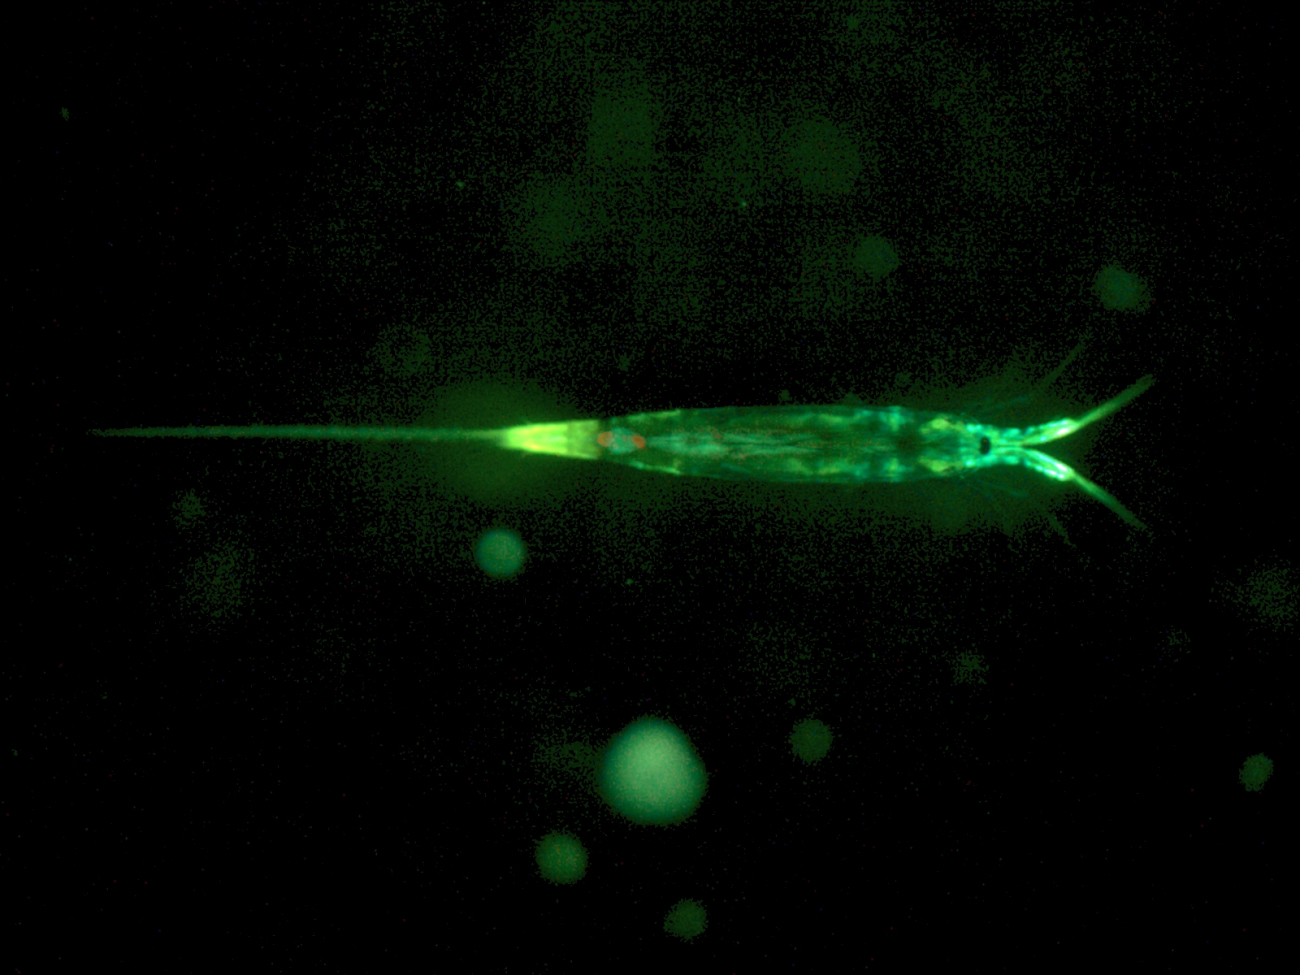 Planktonic copepod, most likely Microsetella sp